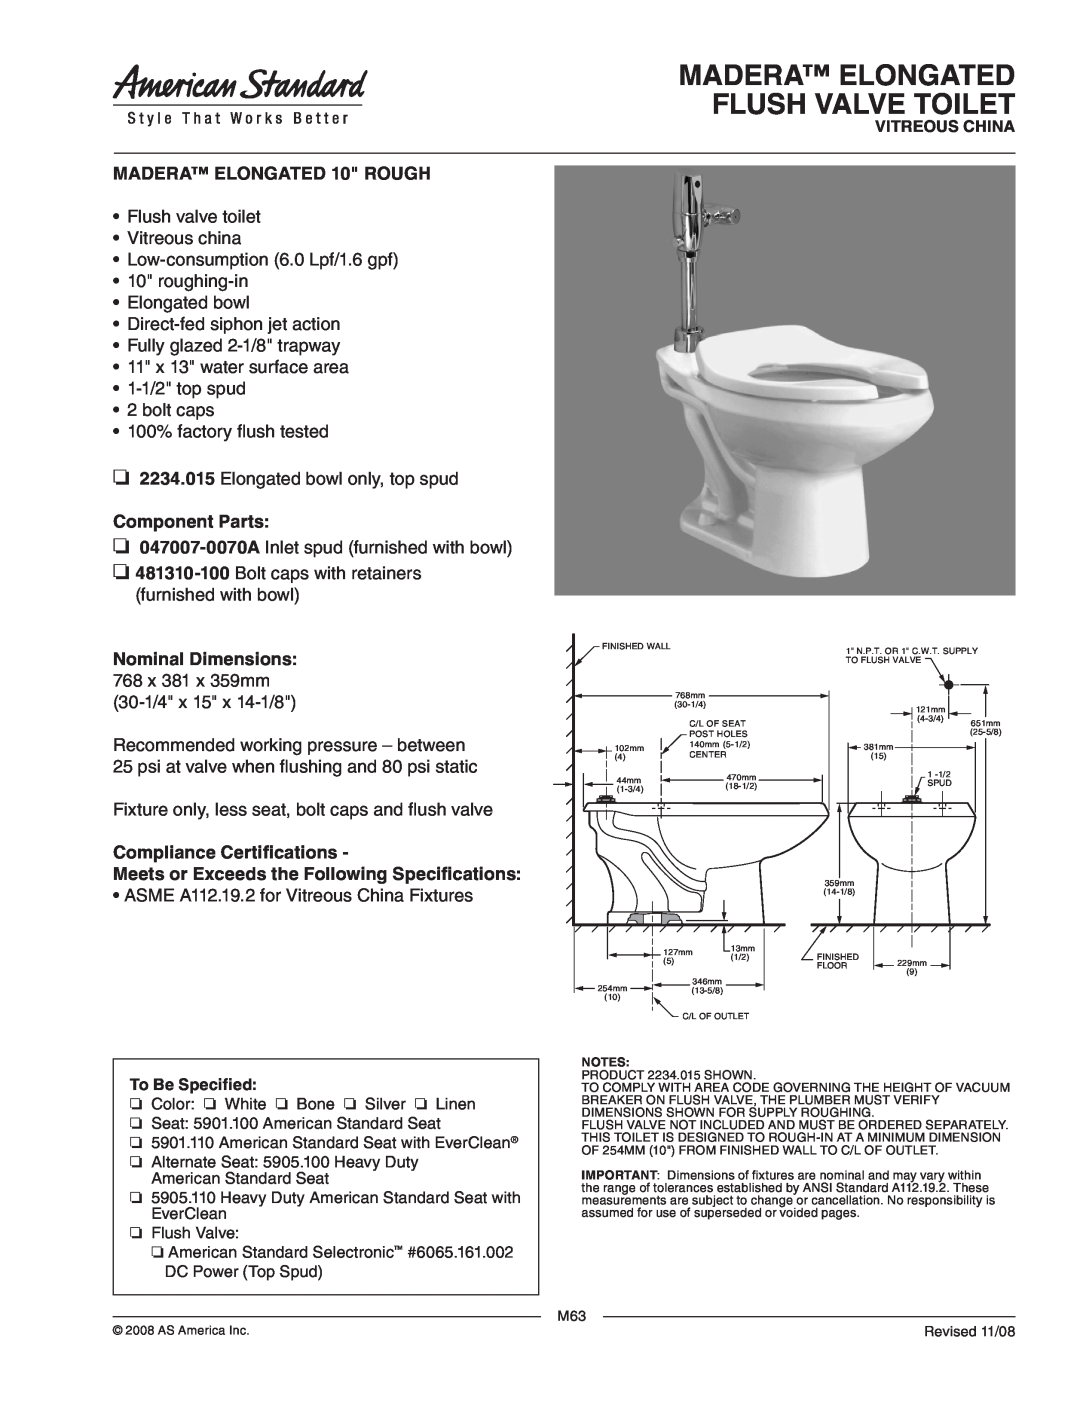 American Standard 481310-100 dimensions Madera Elongated Flush Valve Toilet, MADERA ELONGATED 10 ROUGH, Component Parts 